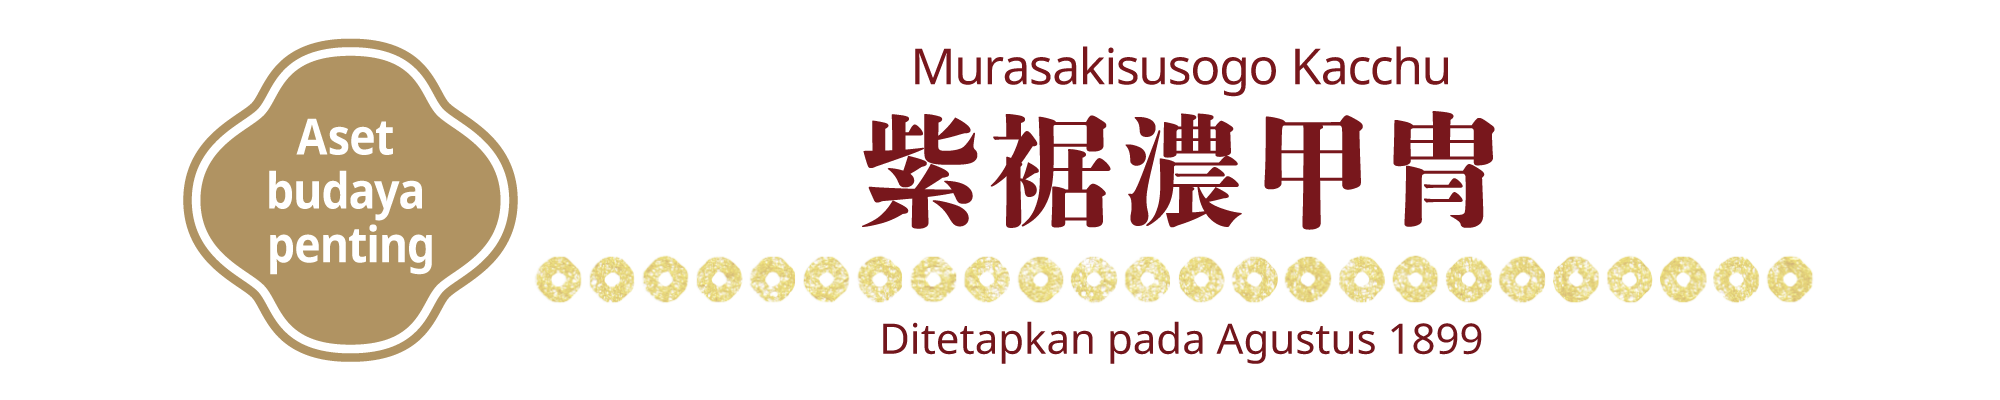 [Aset budaya penting]Murasakisusogo Kacchu, Ditetapkan pada Agustus 1899